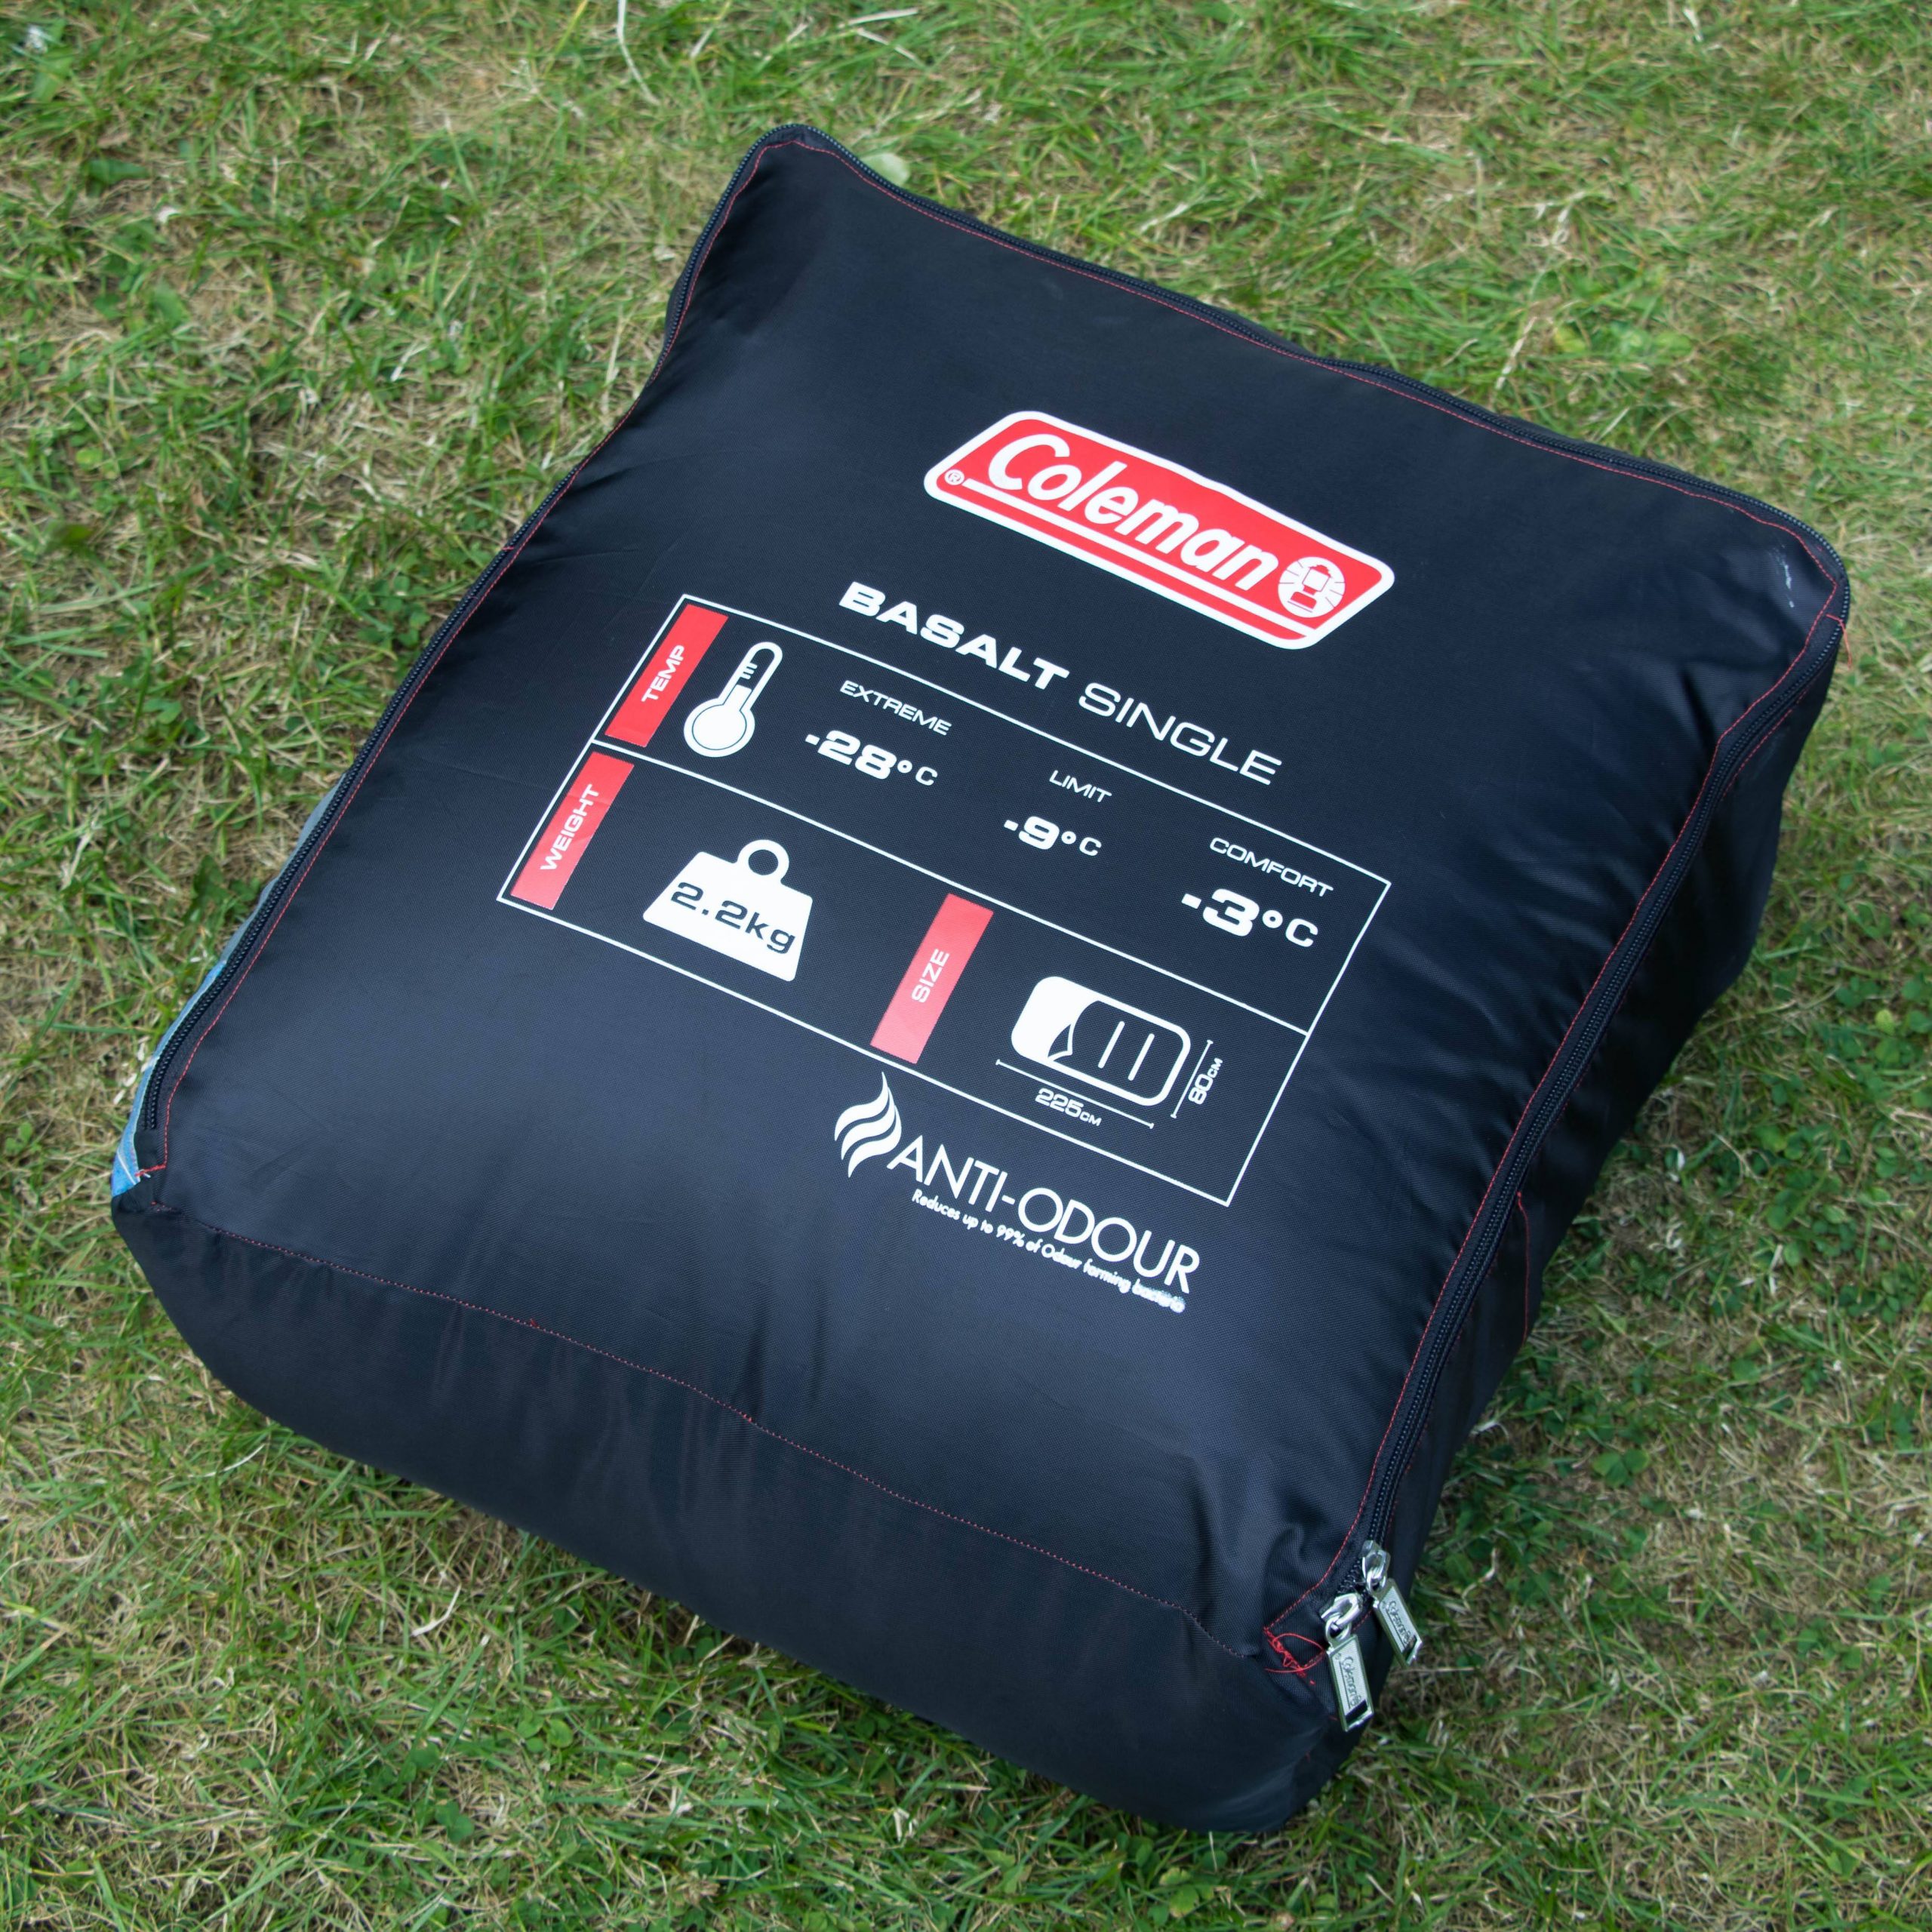 The Basalt sleeping bag in its case